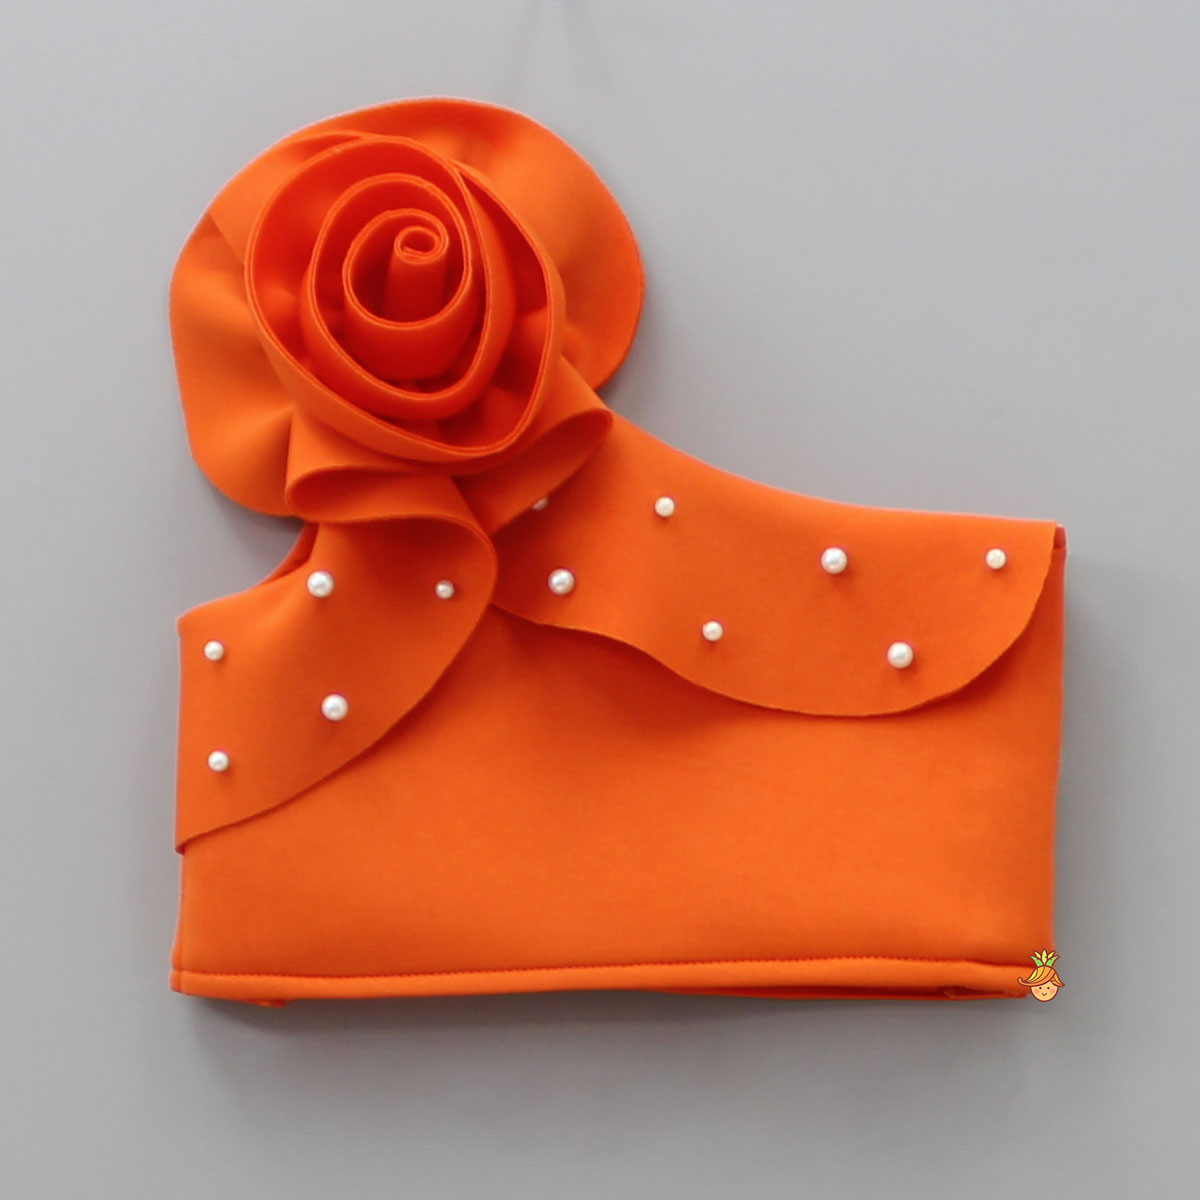 Orange Rose One Shoulder Crop Top and Matching Pant